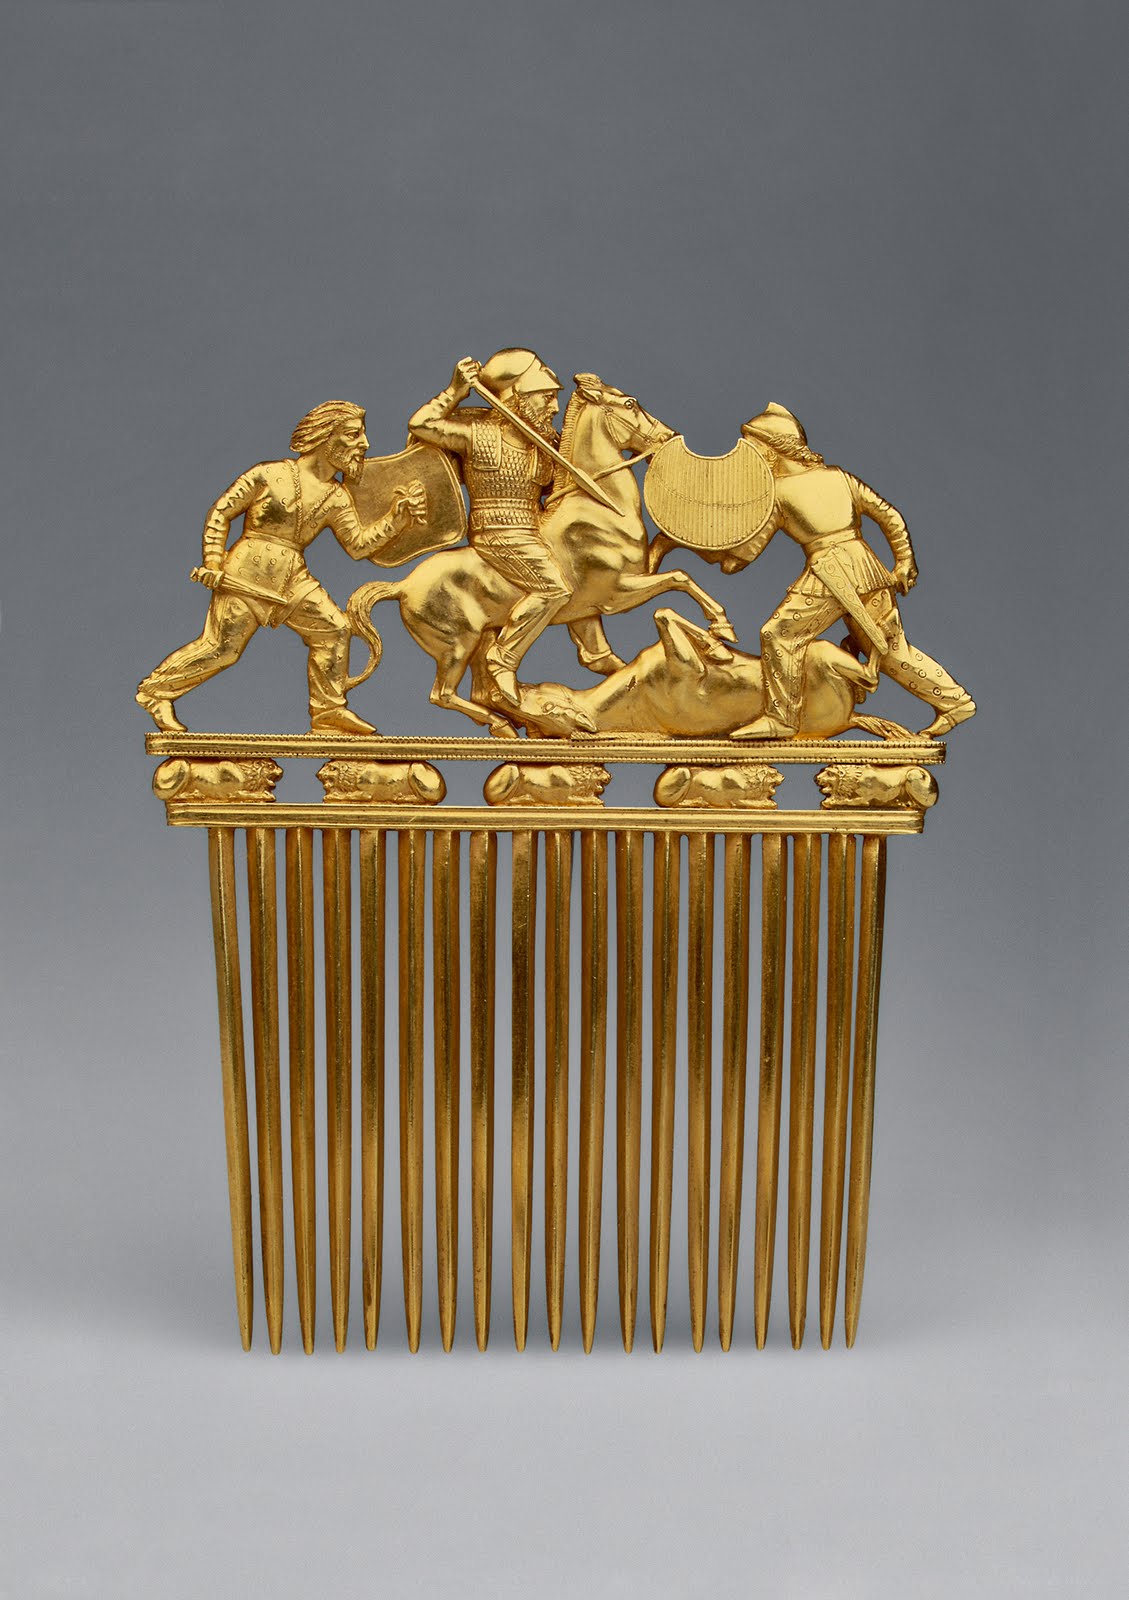 Scythian golden comb 5th century BC